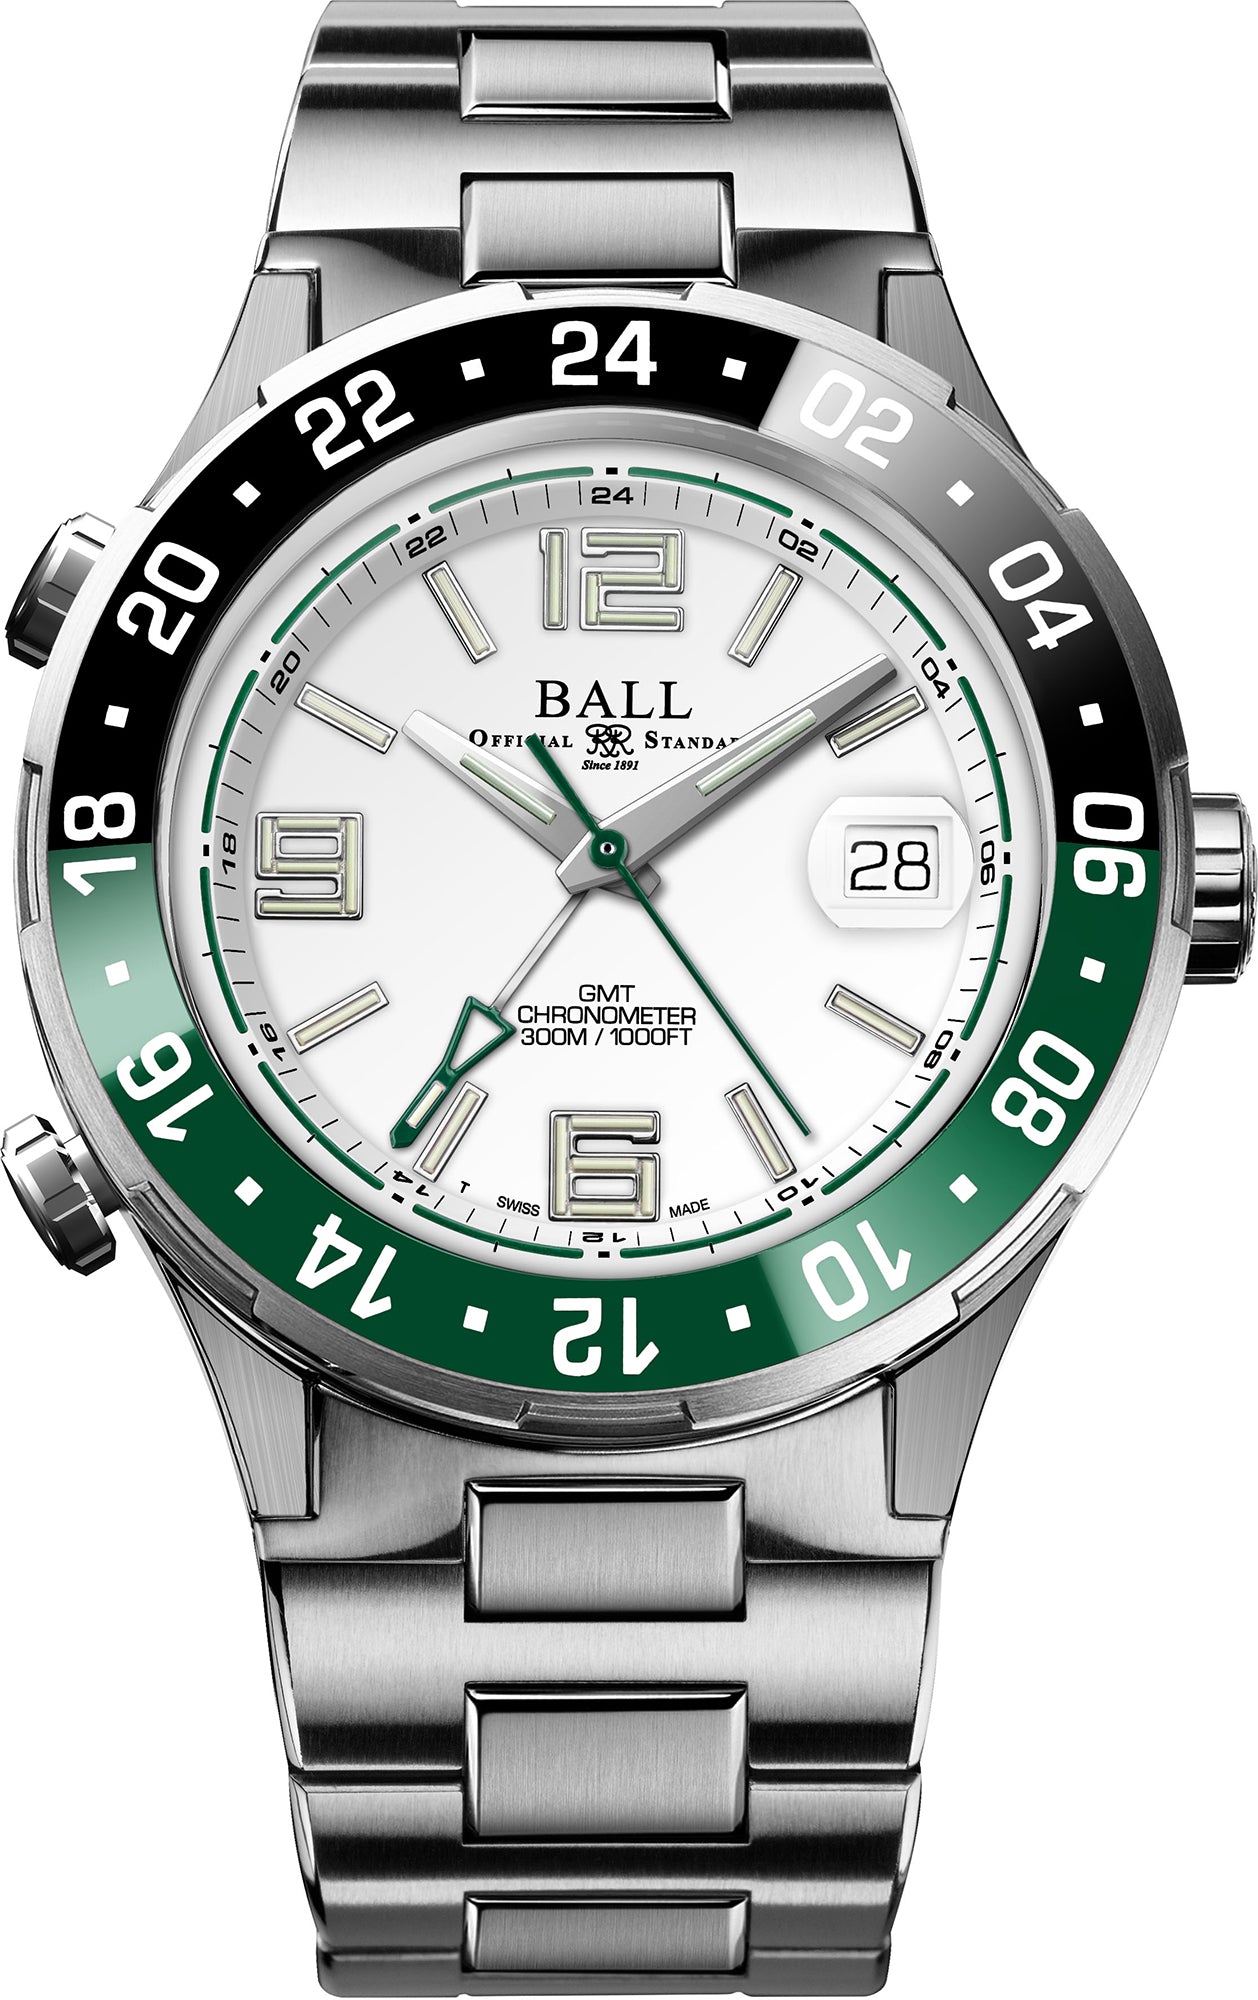 Photos - Wrist Watch Ball Watch Company Roadmaster Pilot GMT Pilot GMT Limited Edition BL-2413 